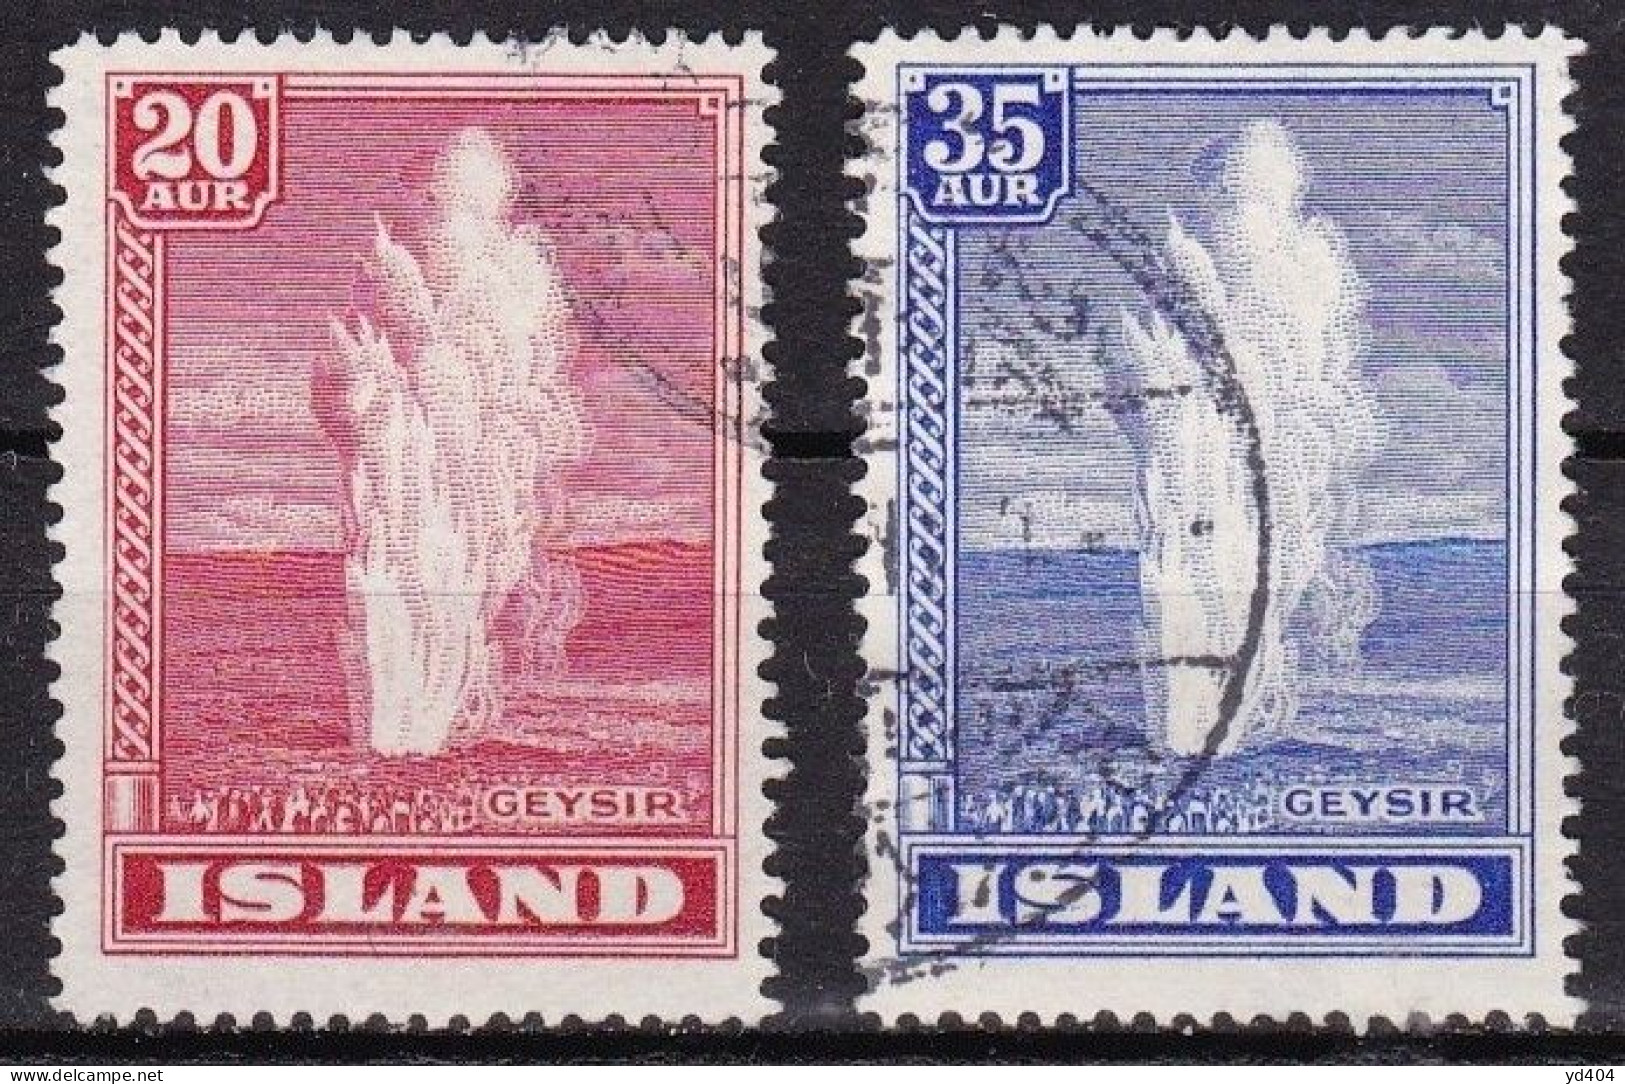 IS036B – ISLANDE – ICELAND – 1938 – THE GREAT GEYSER – SG # 225/6 USED - Usados